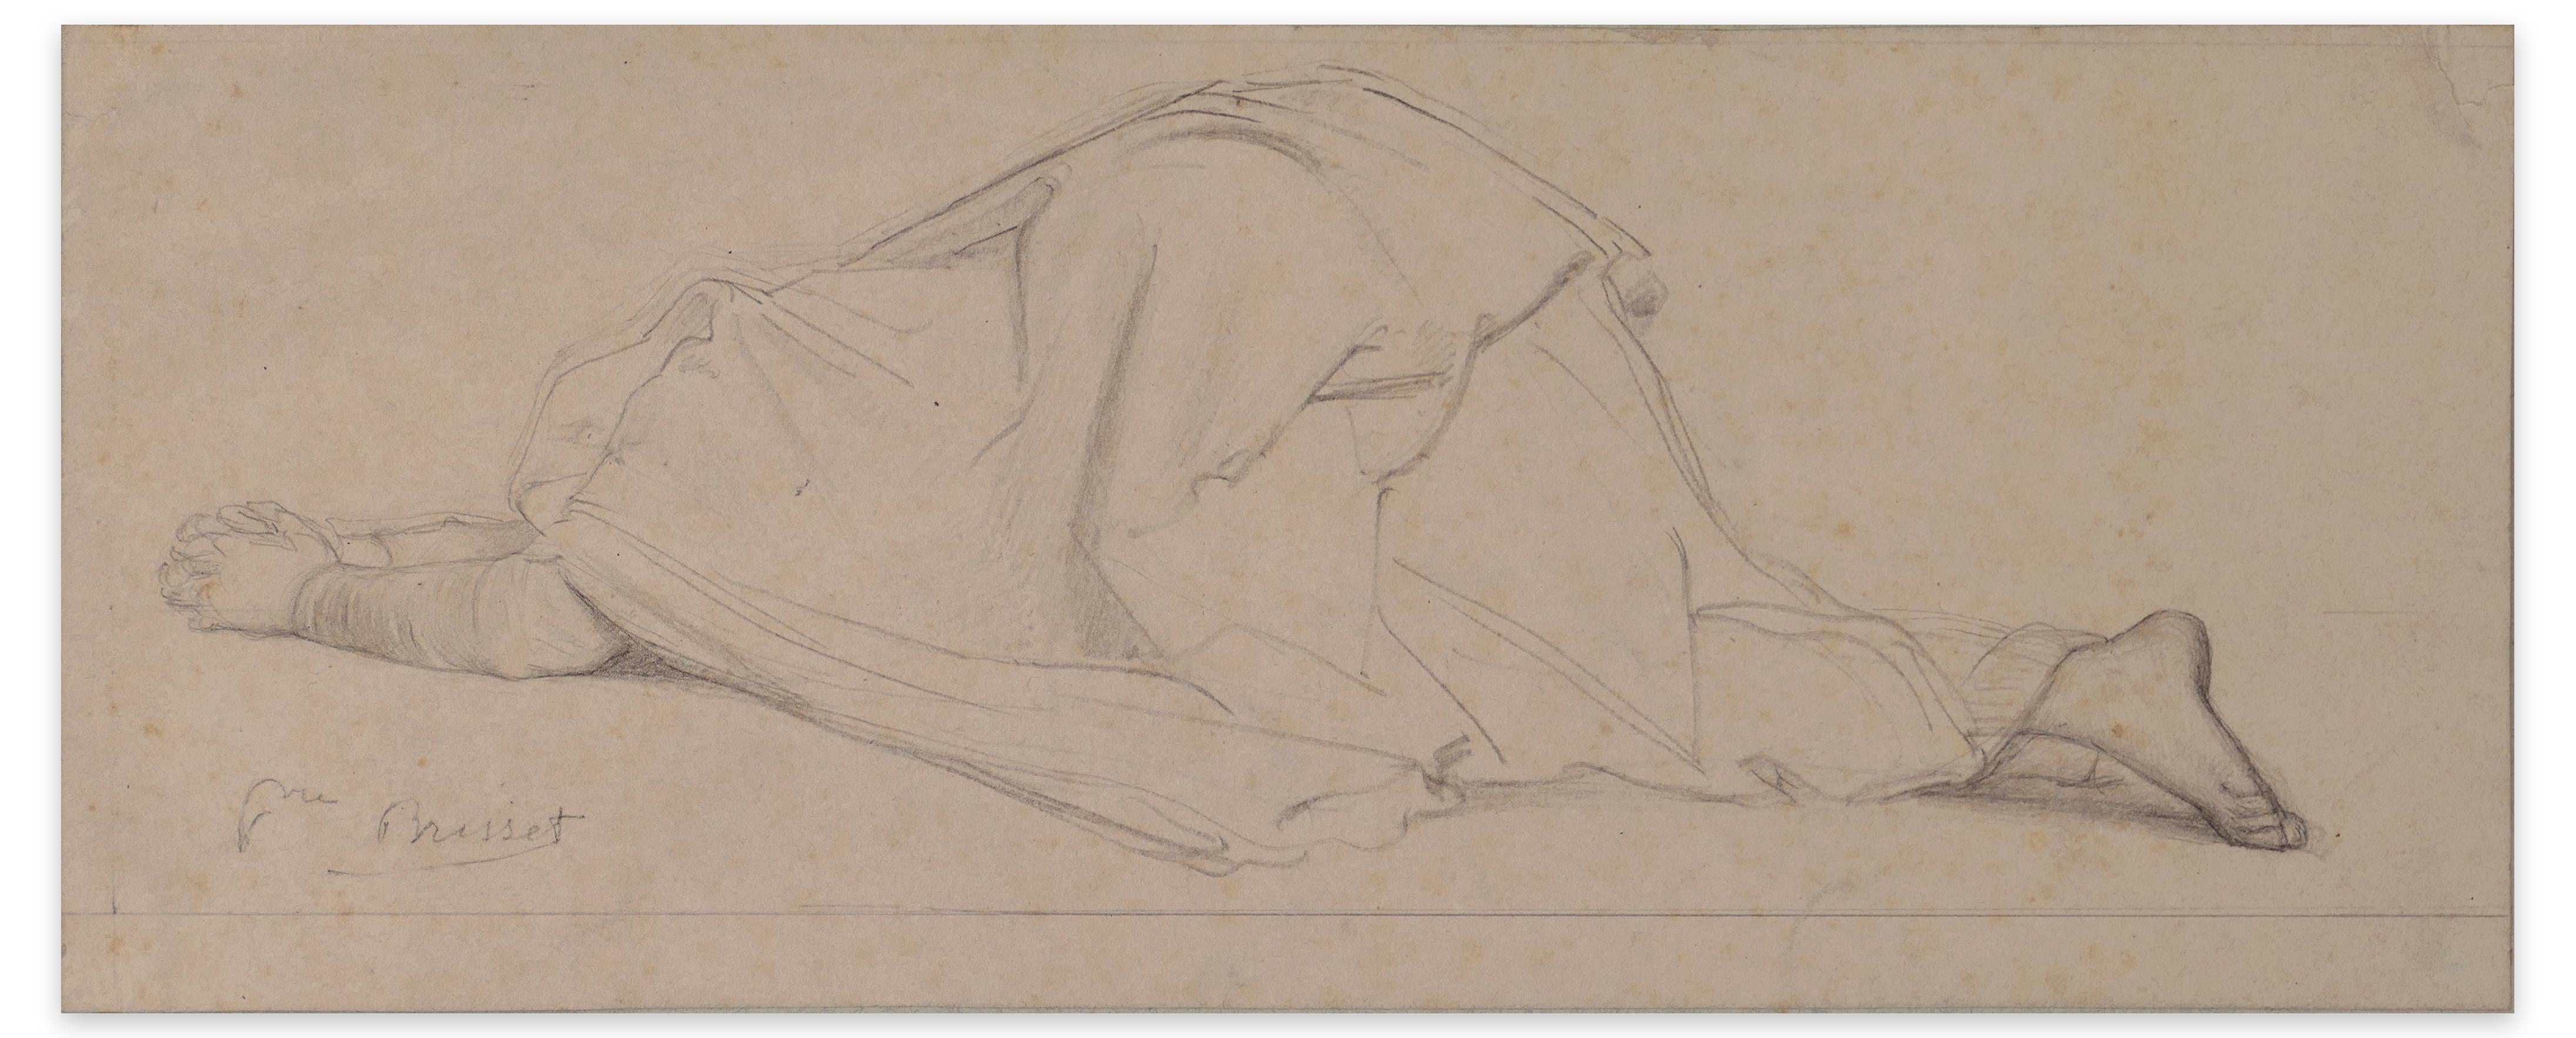 Pierre Nicolas Brisset Figurative Art - Praying Woman - Pencil Drawing by P.N. Brisset - Late 1800 